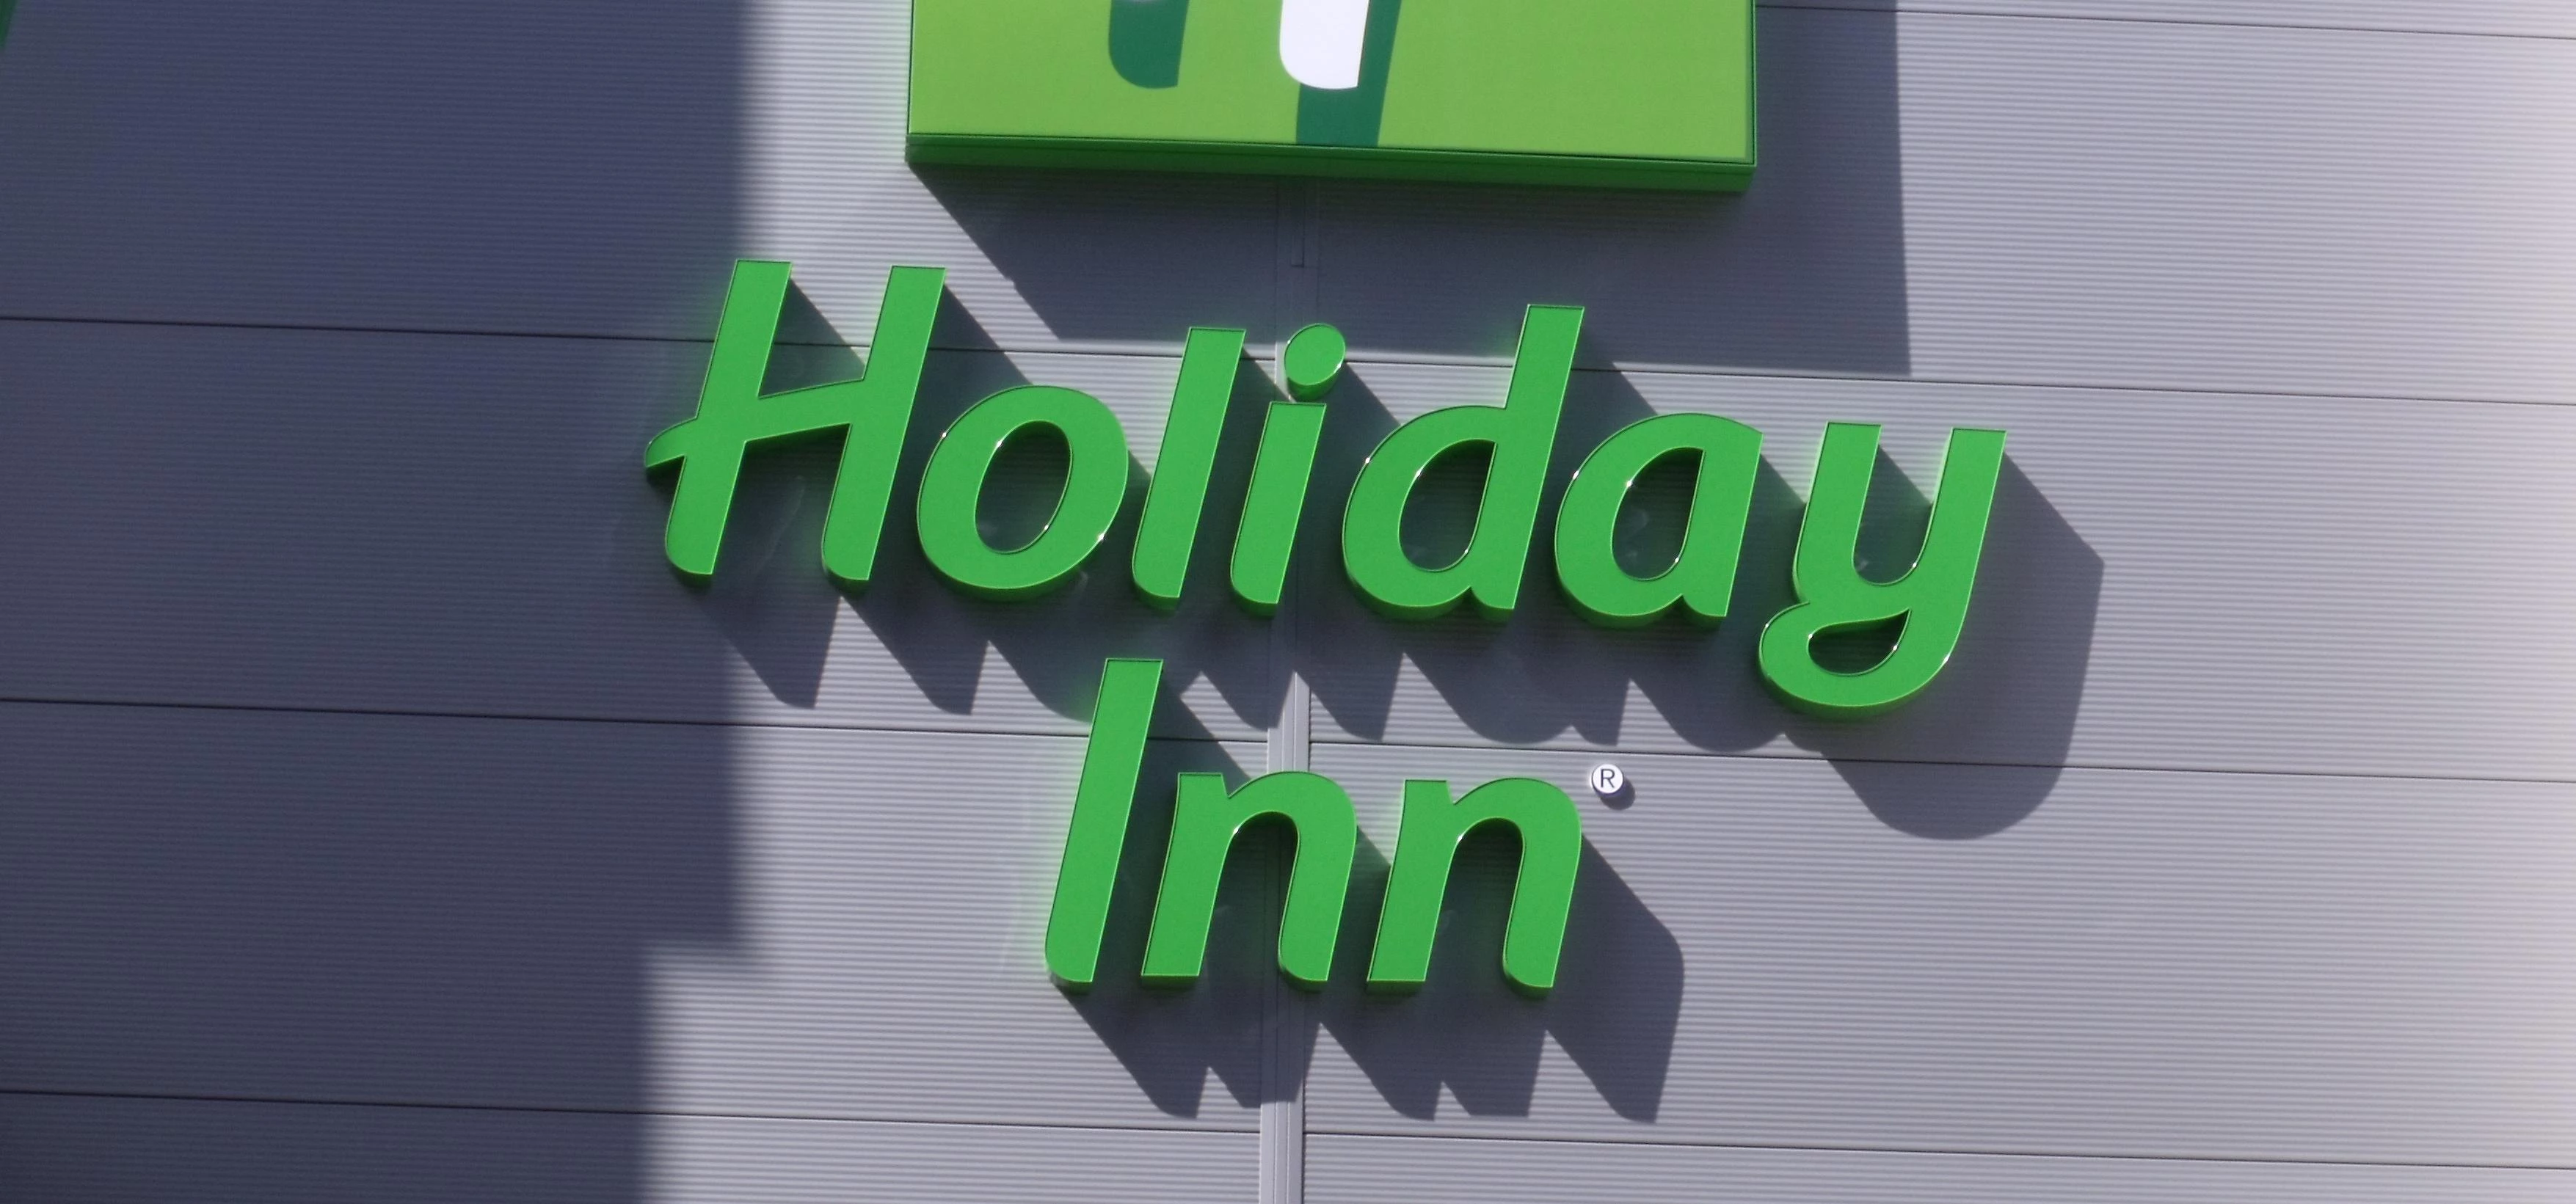 Holiday Inn - sign from Hill Street, Birmingham